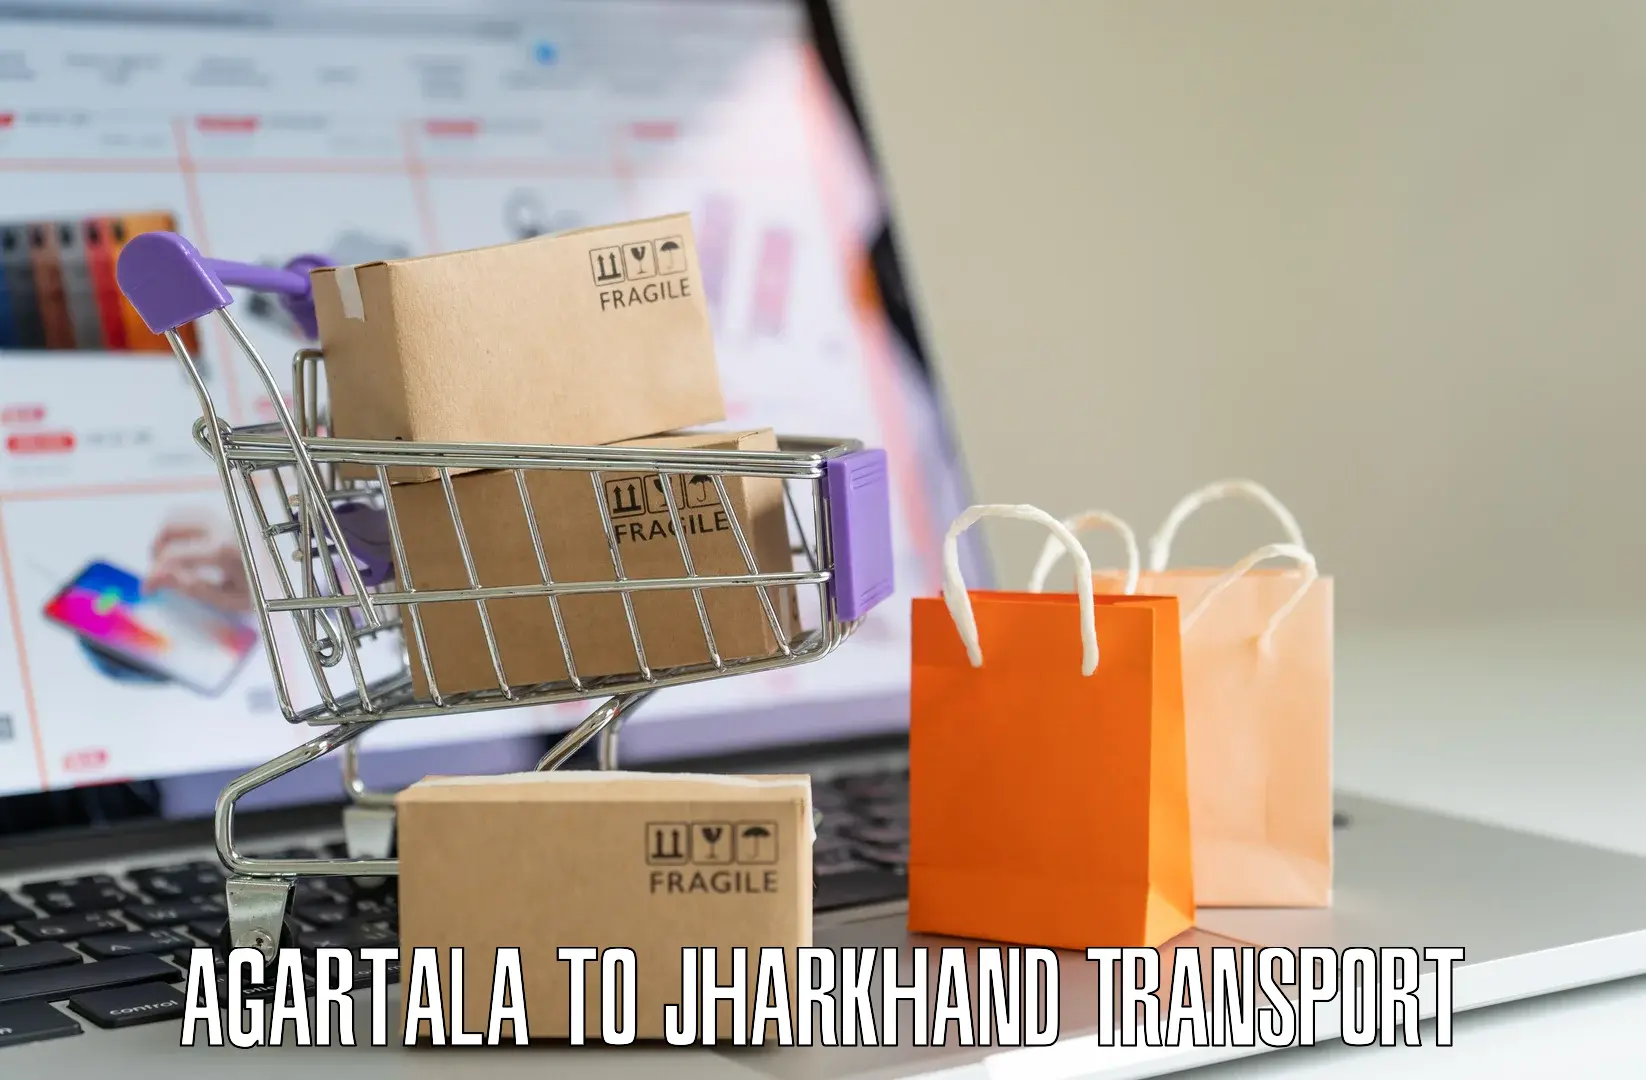 Commercial transport service Agartala to Barwadih